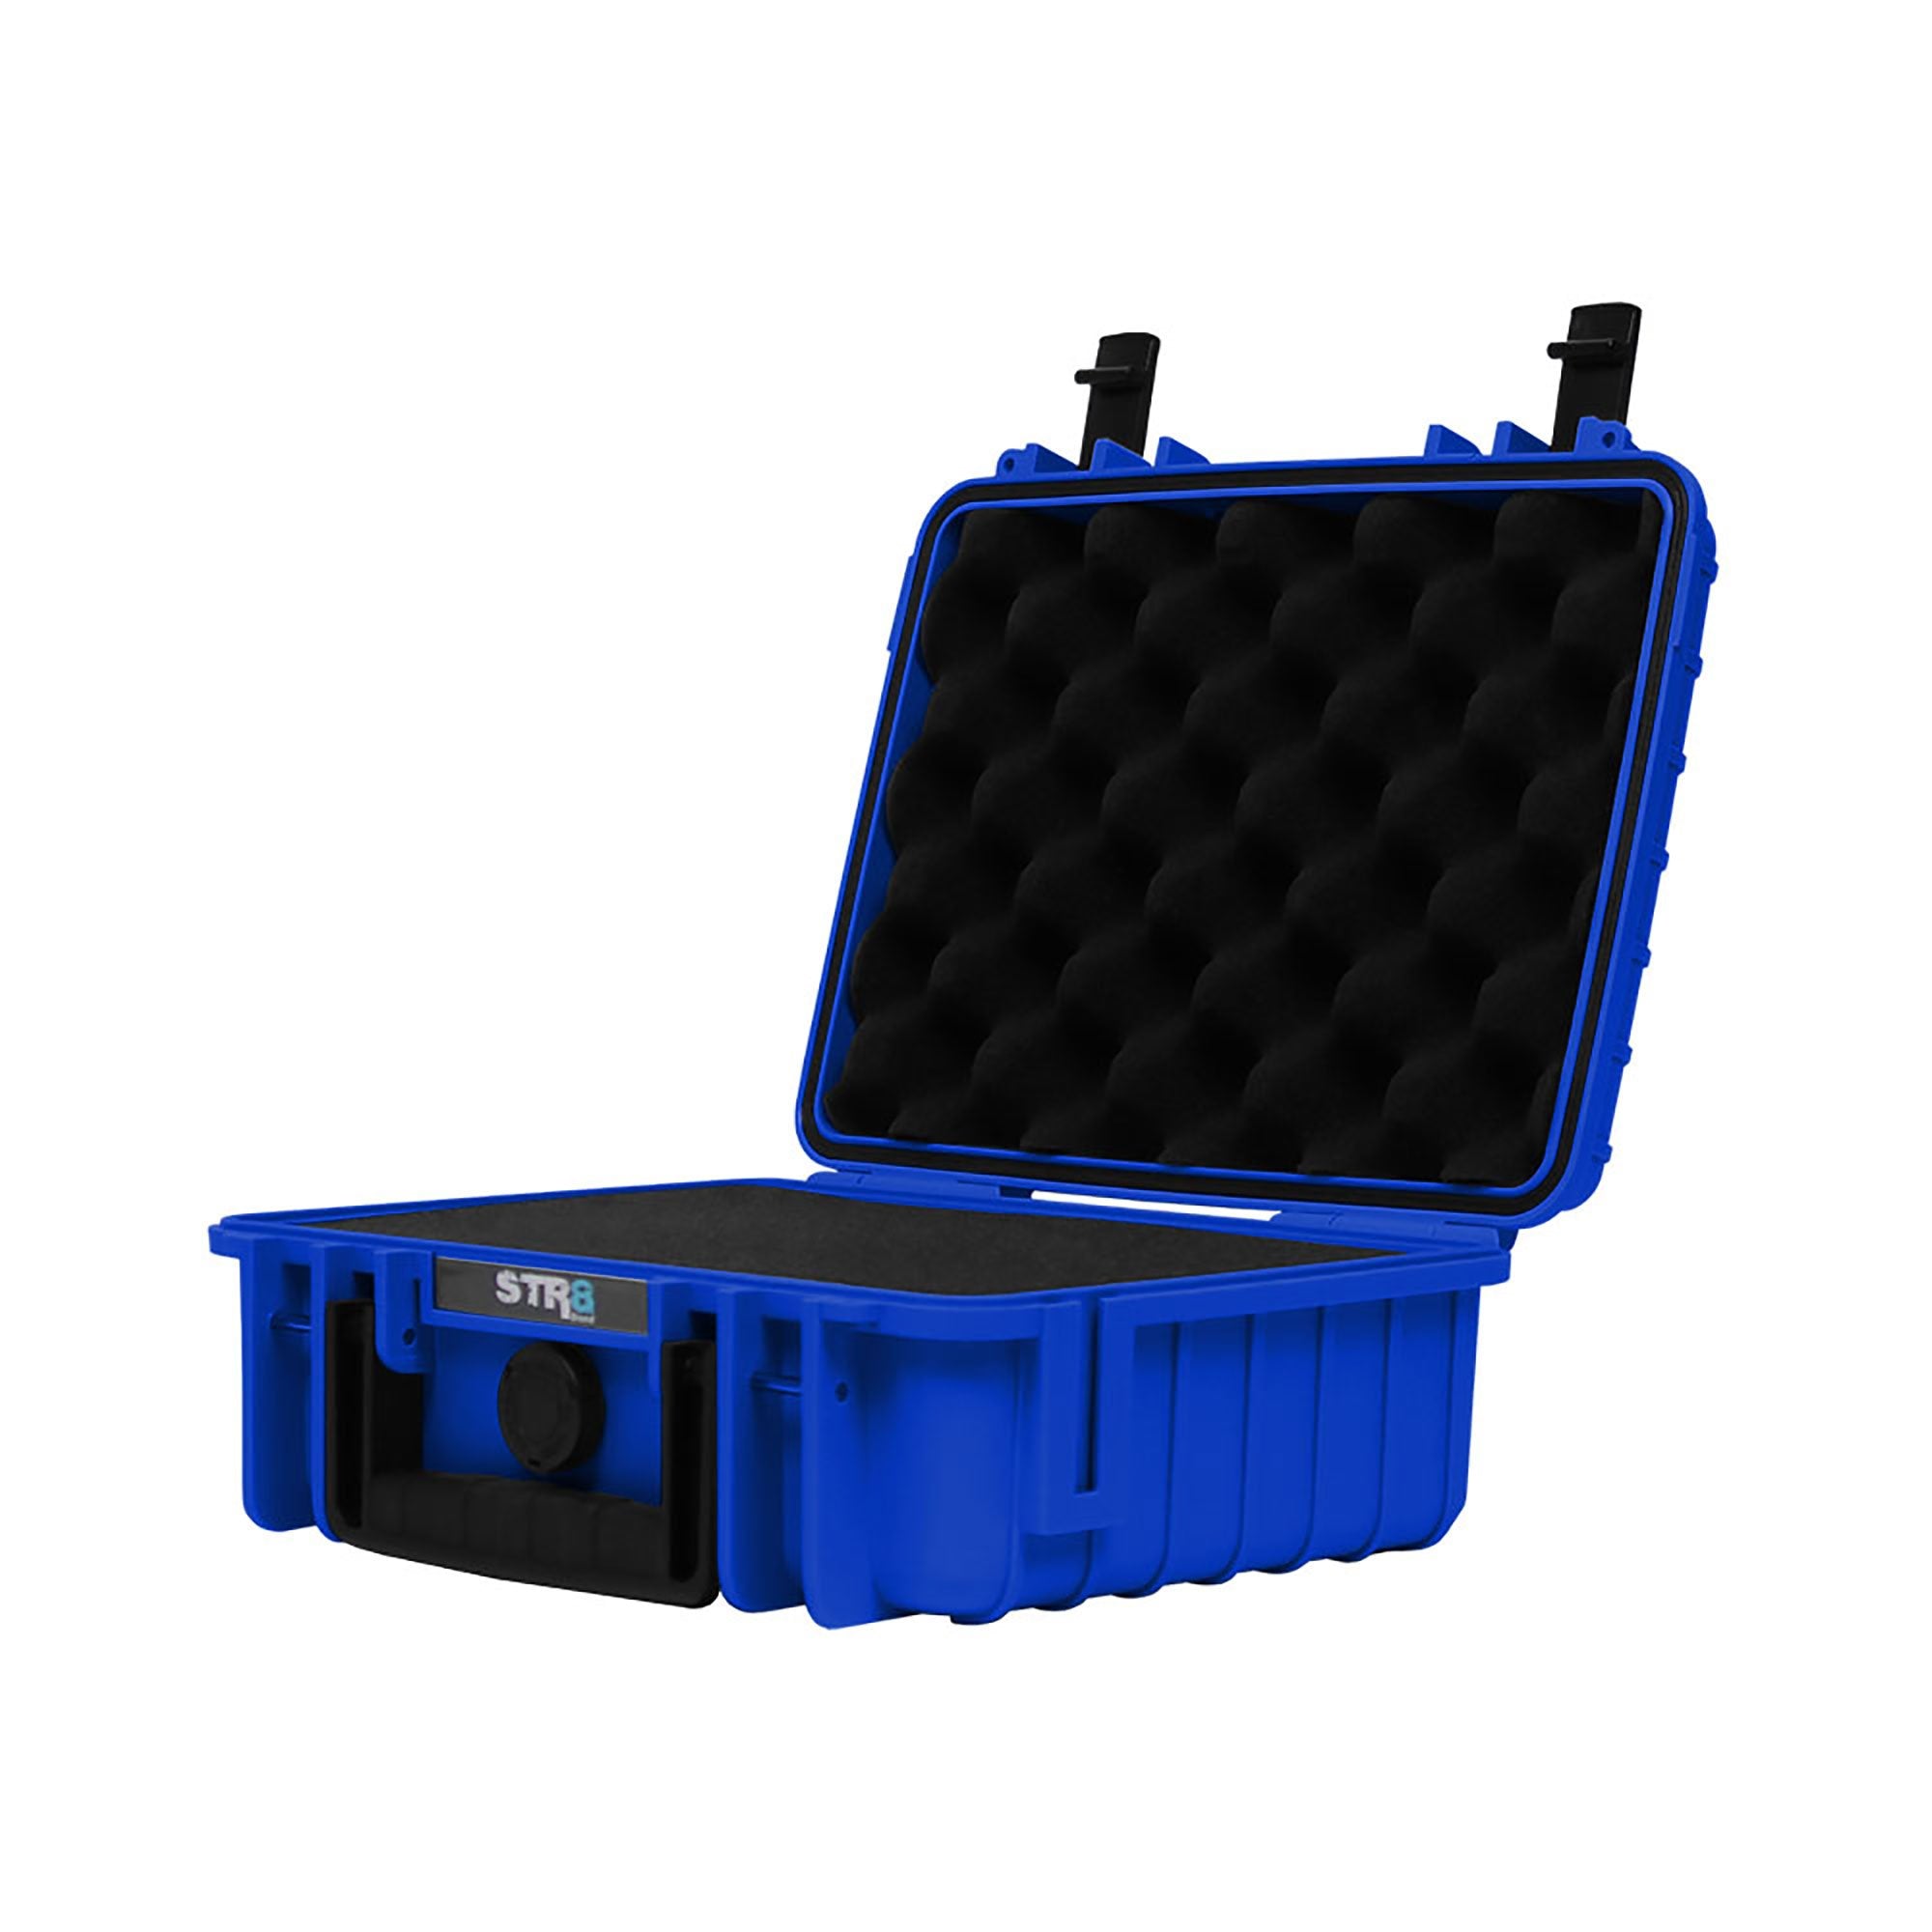 10" 2 Layer Cobalt Blue STR8 Case - 2